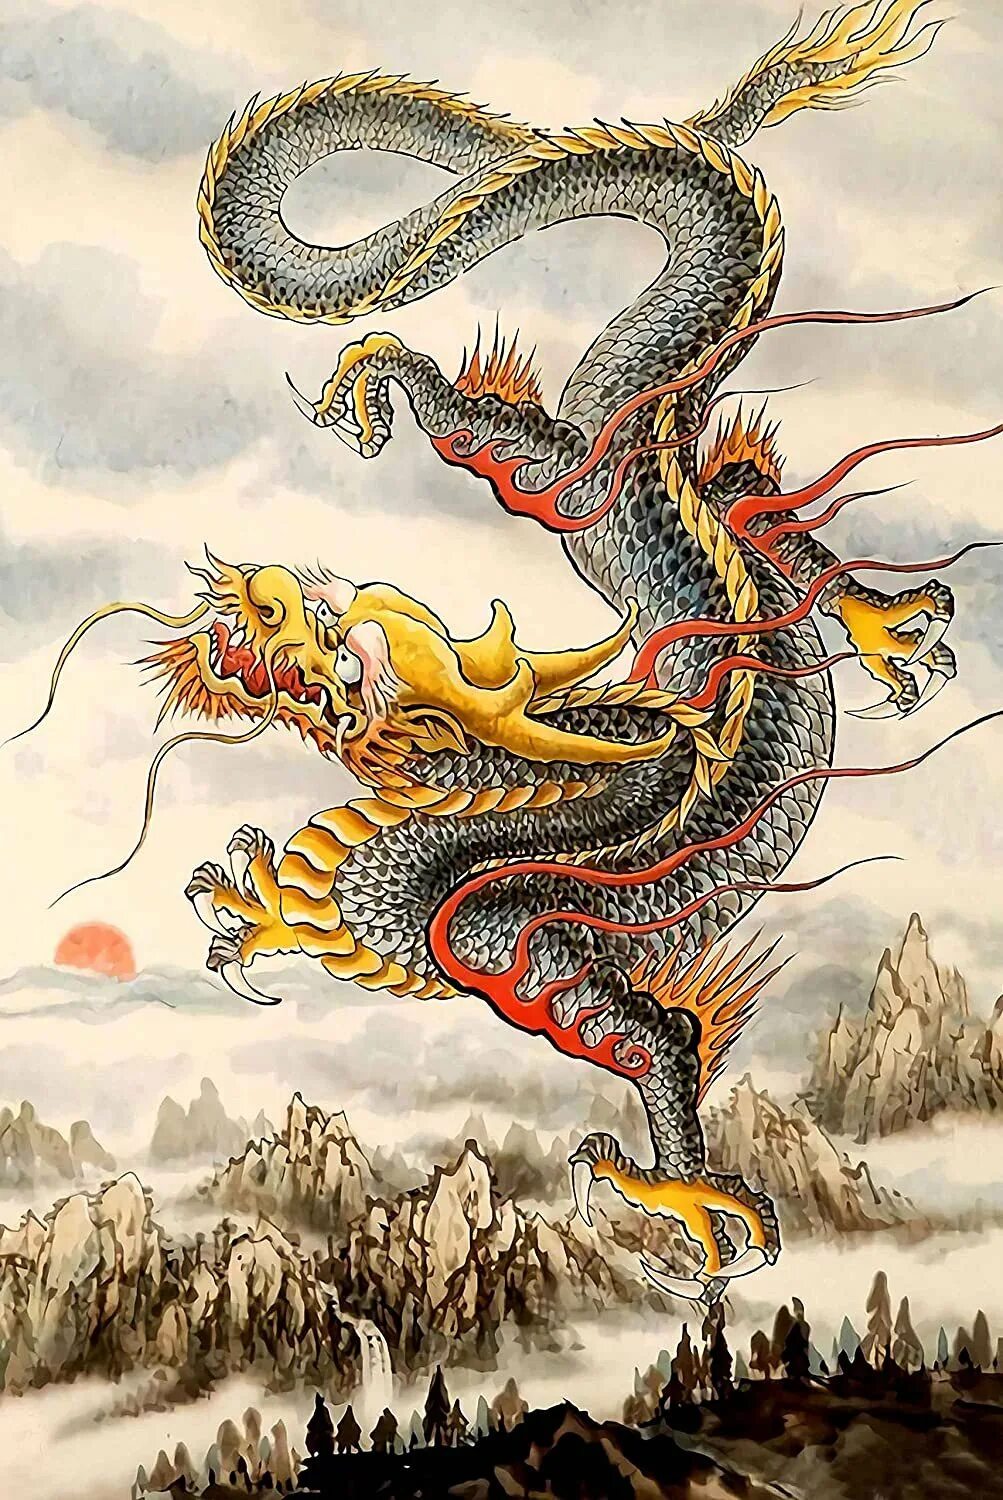 Дилун Земляной дракон. Шэньлун дракон мифология. Лун Ван дракон. Цин-лун - зеленый дракон. Китайский японский дракон